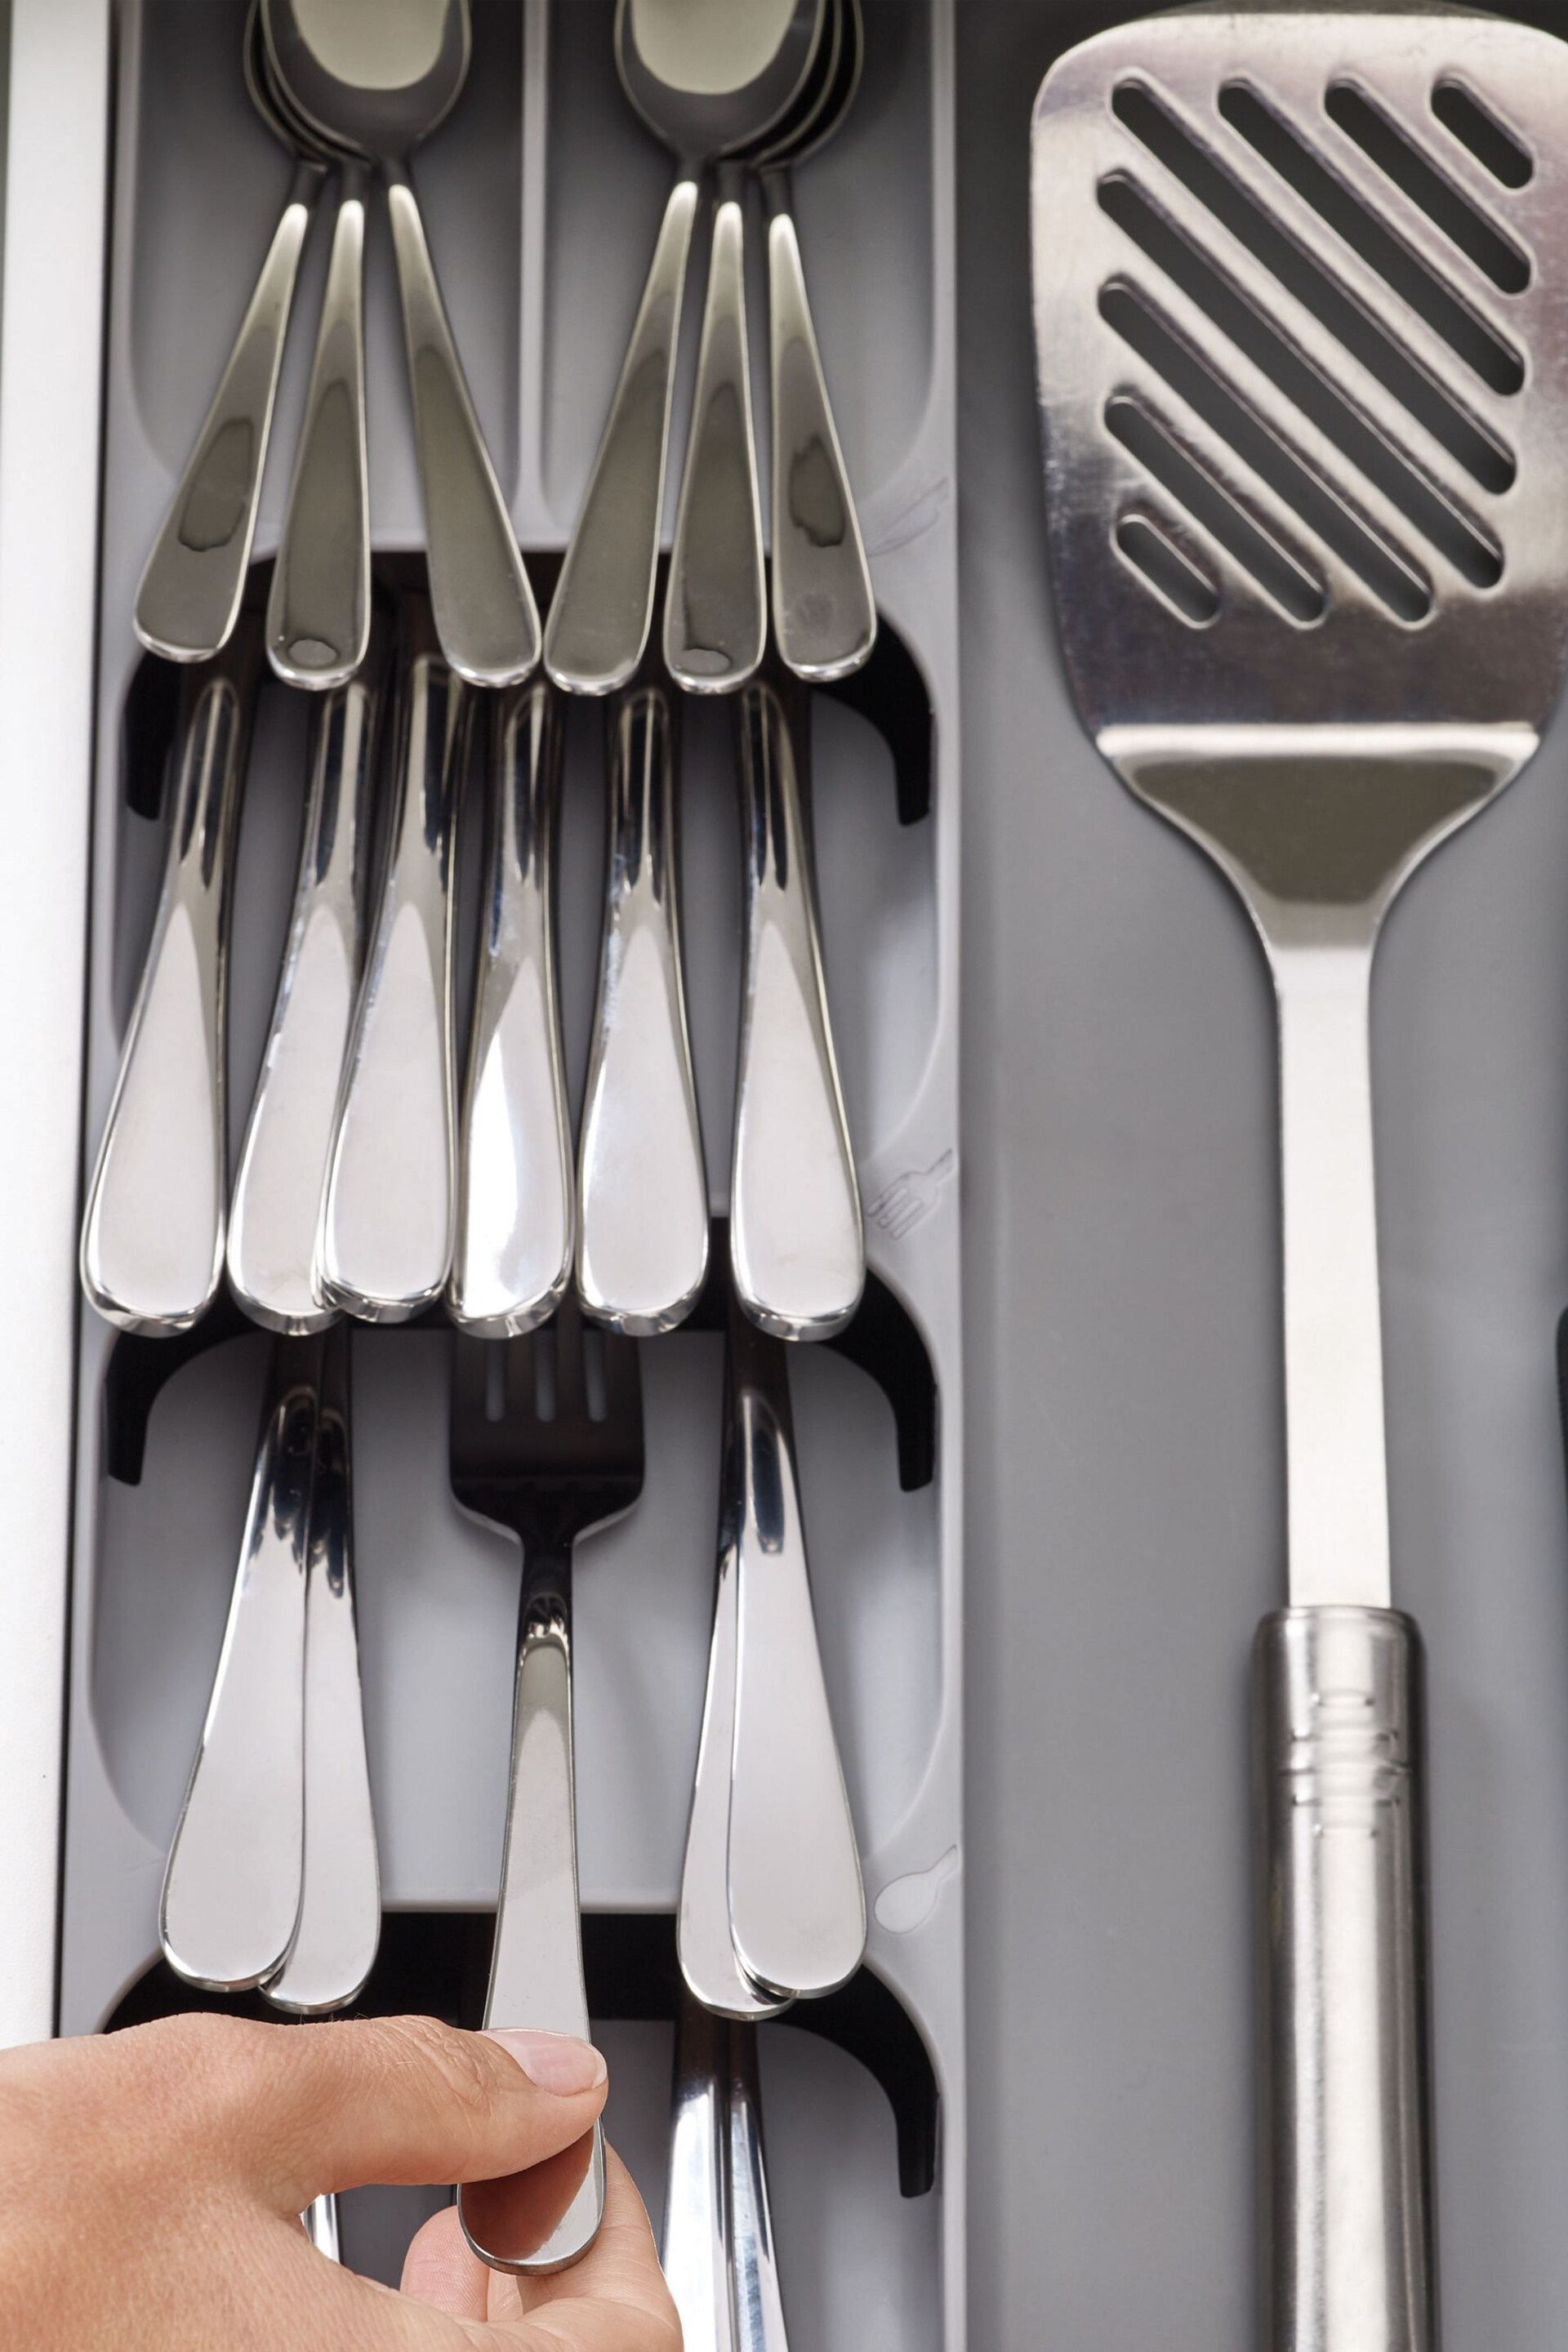 Joseph Joseph Grey DrawerStore Cutlery Utensil Gadget Organiser - Image 4 of 7